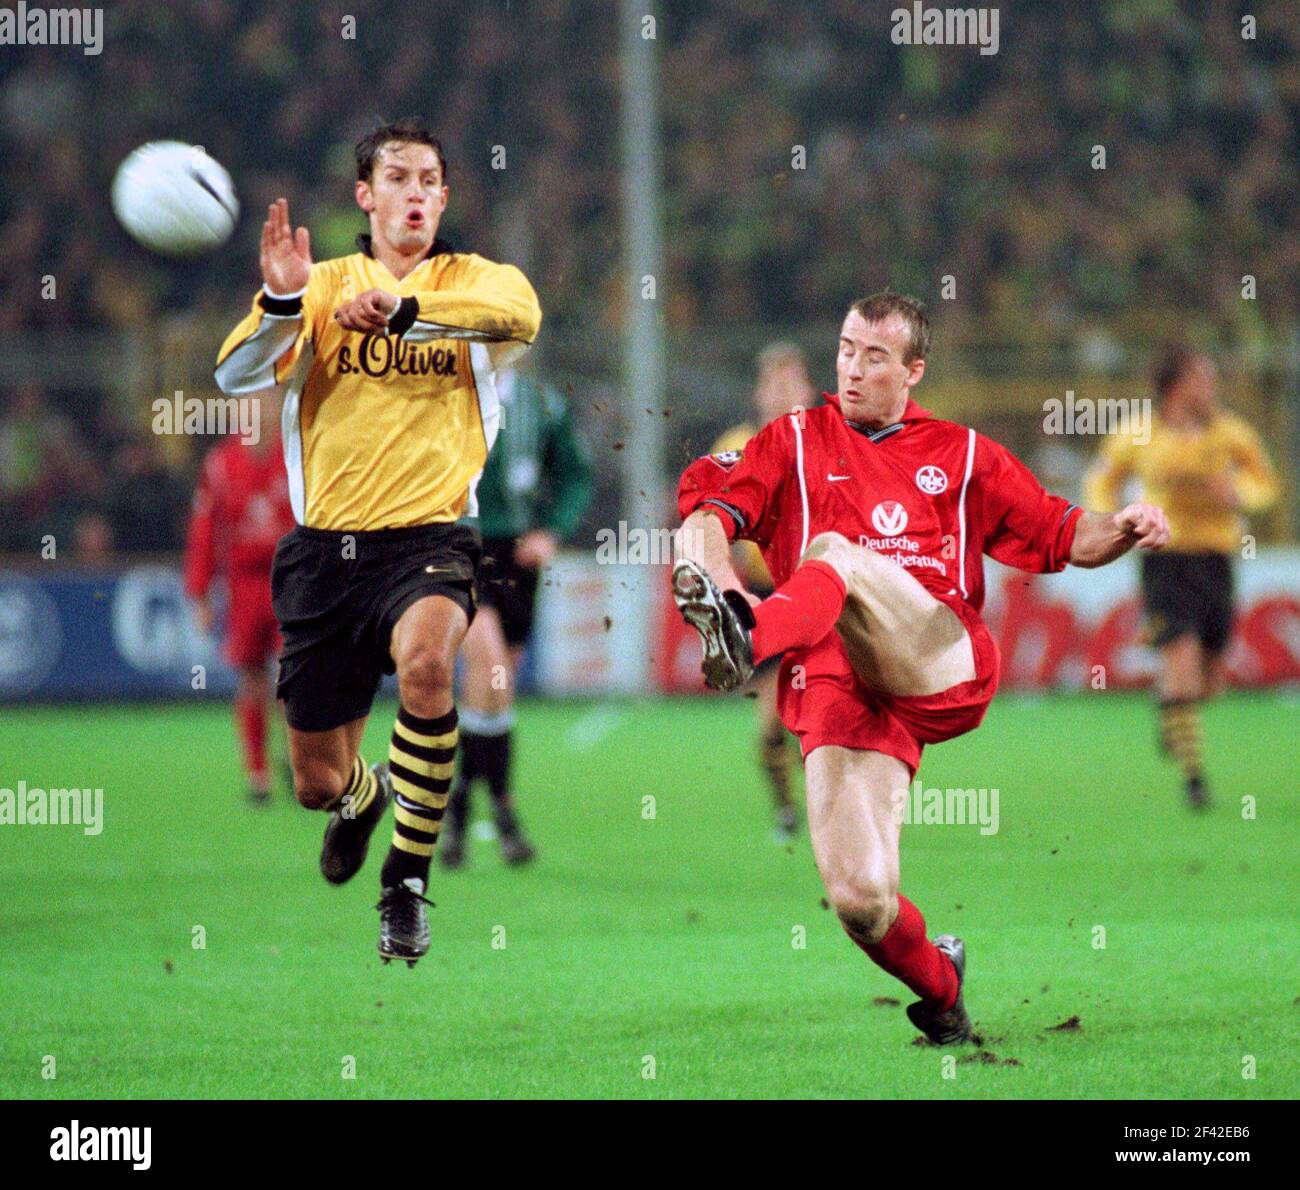 Dortmund, Germany 4.2.2000, Football:  Bundesliga season 1999/2000 Borussia Dortmund vs FC Kaiserslautern 0:1  Michael SCHJOENBERG (Kaiserslautern, right), Heiko HERRLICH  (Dortmund) Stock Photo